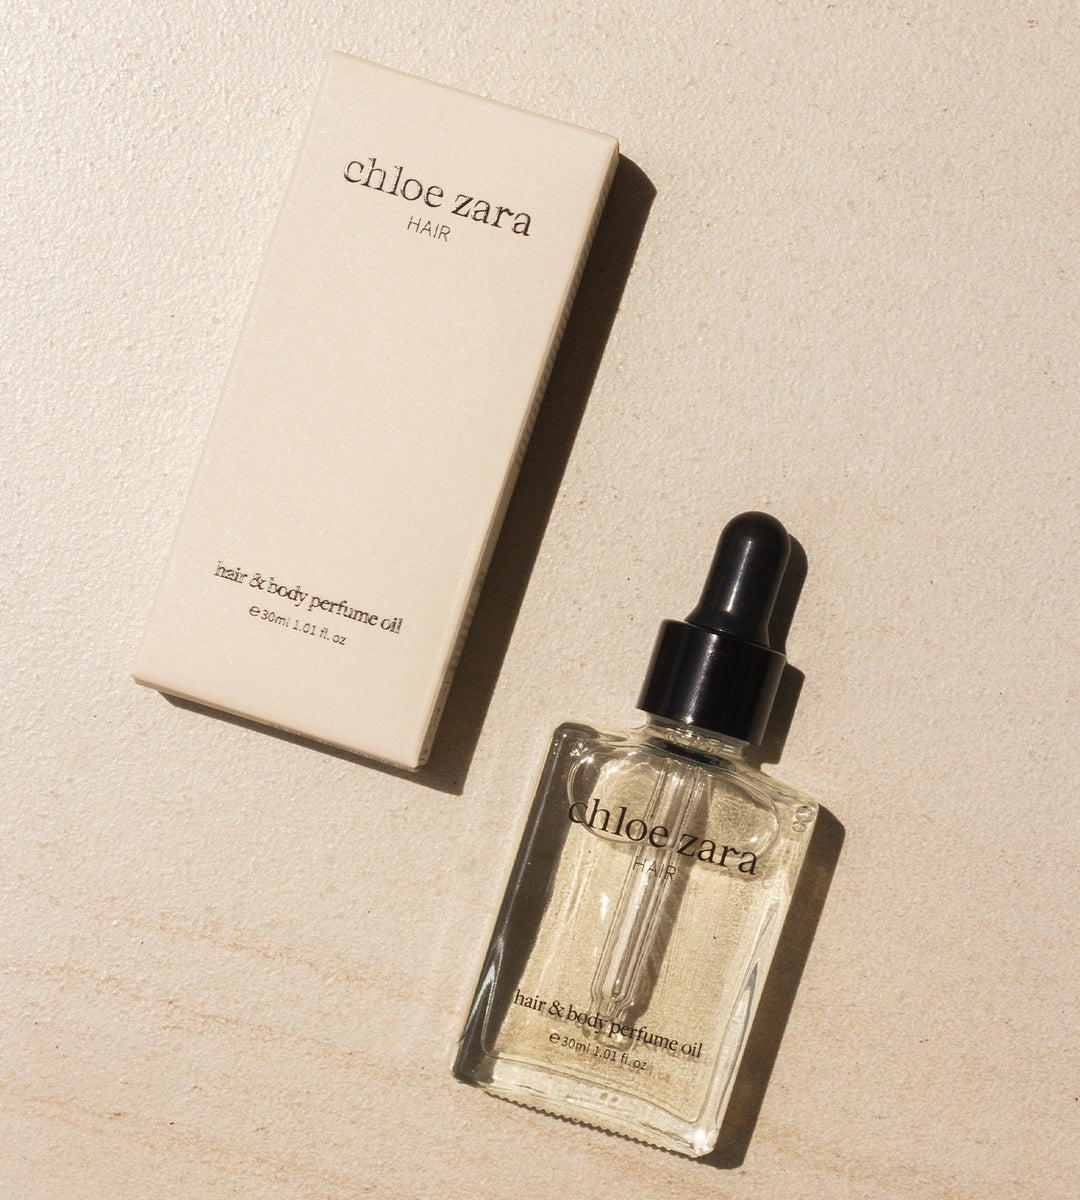 Chloe Zara Hair | Mini Hair & Body Perfume Oil